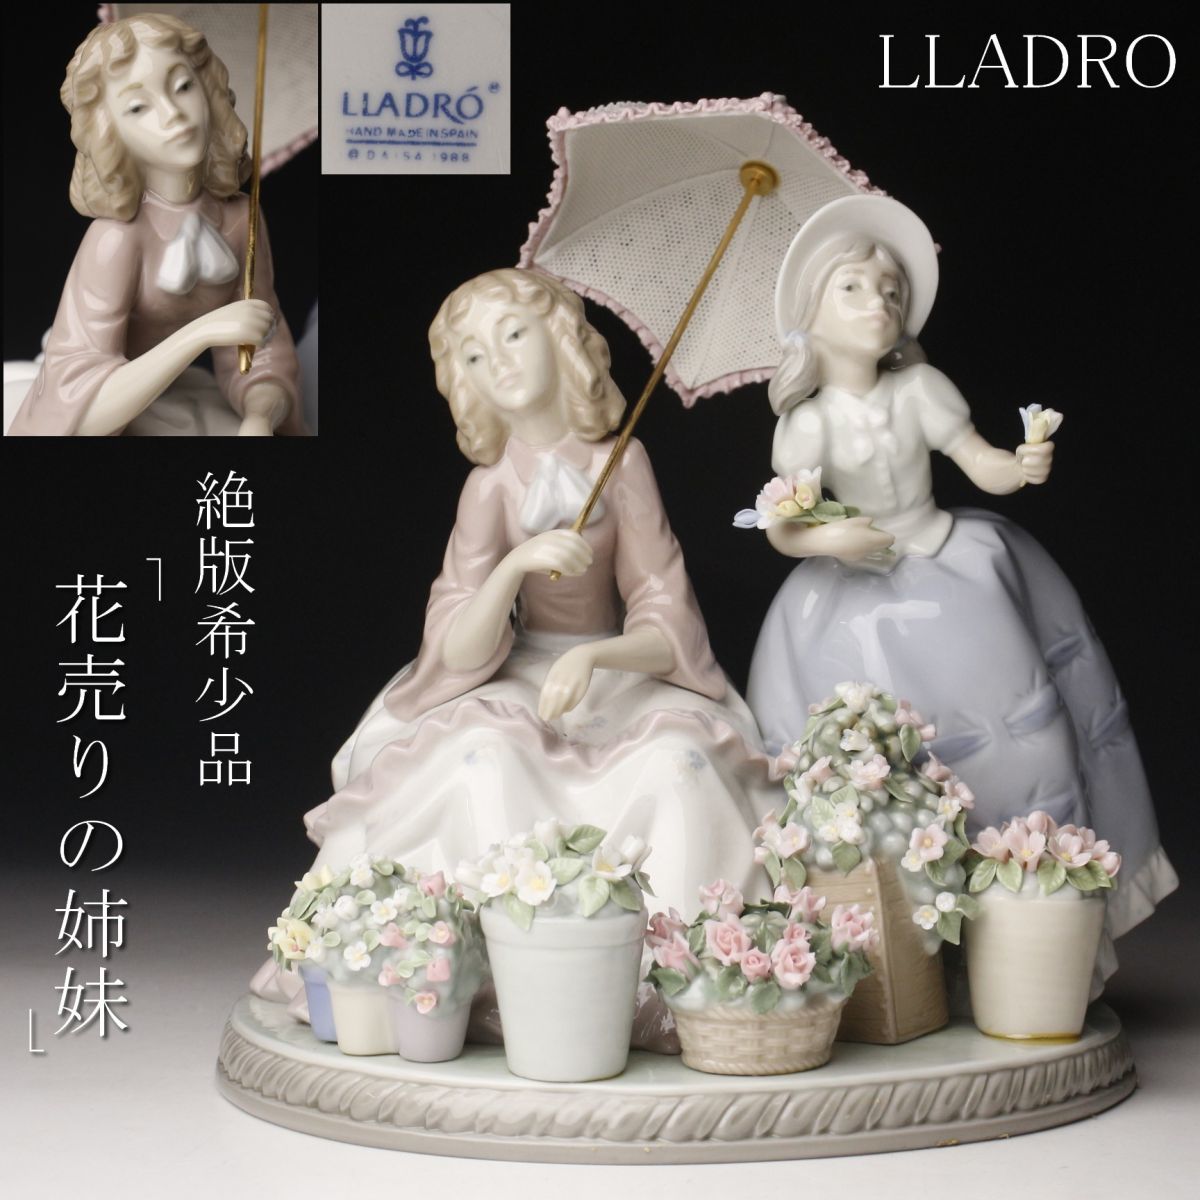 LIG】絶版希少品 LLADRO リヤドロ 陶器人形 「花売りの姉妹」 細密造